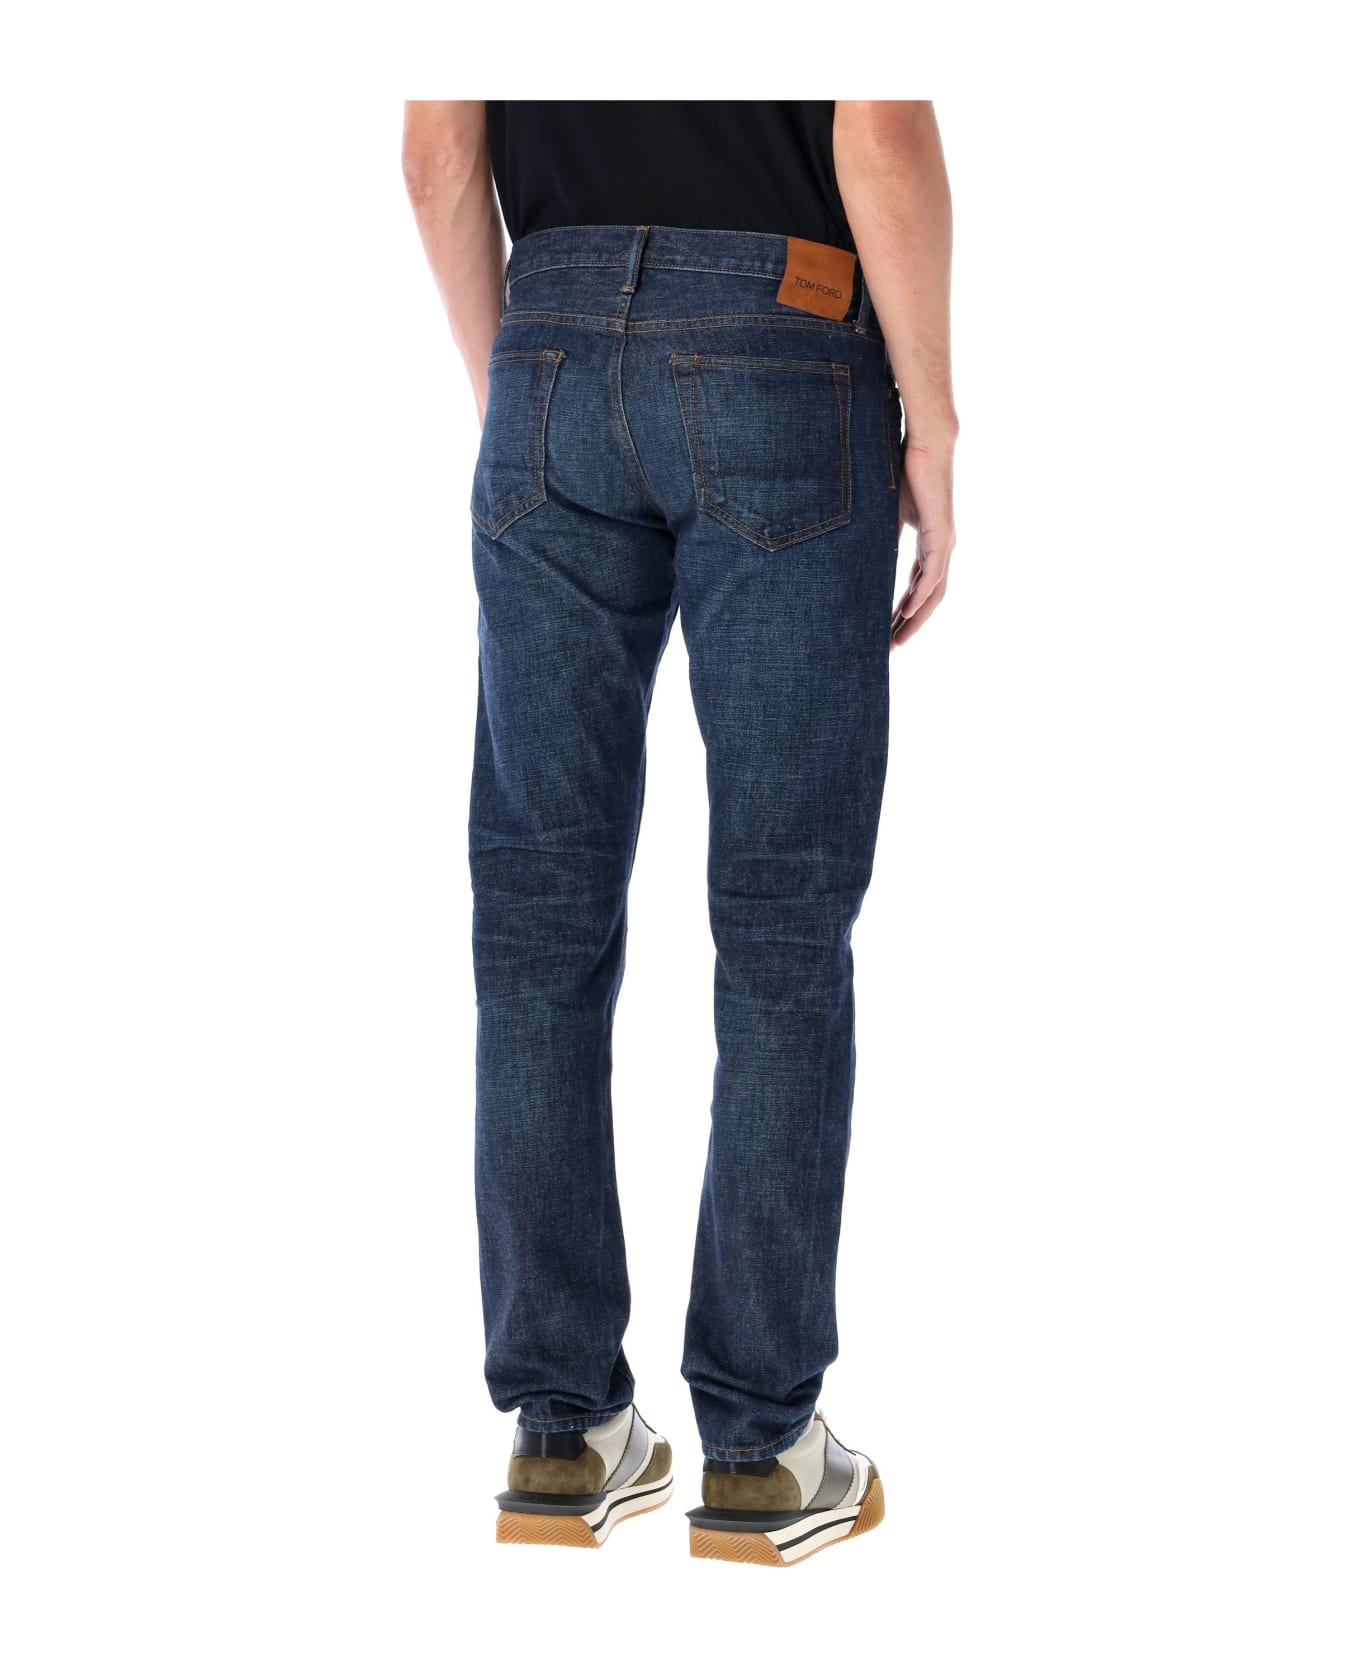 Tom Ford Slim Denim Jeans - INDIGO WASHED